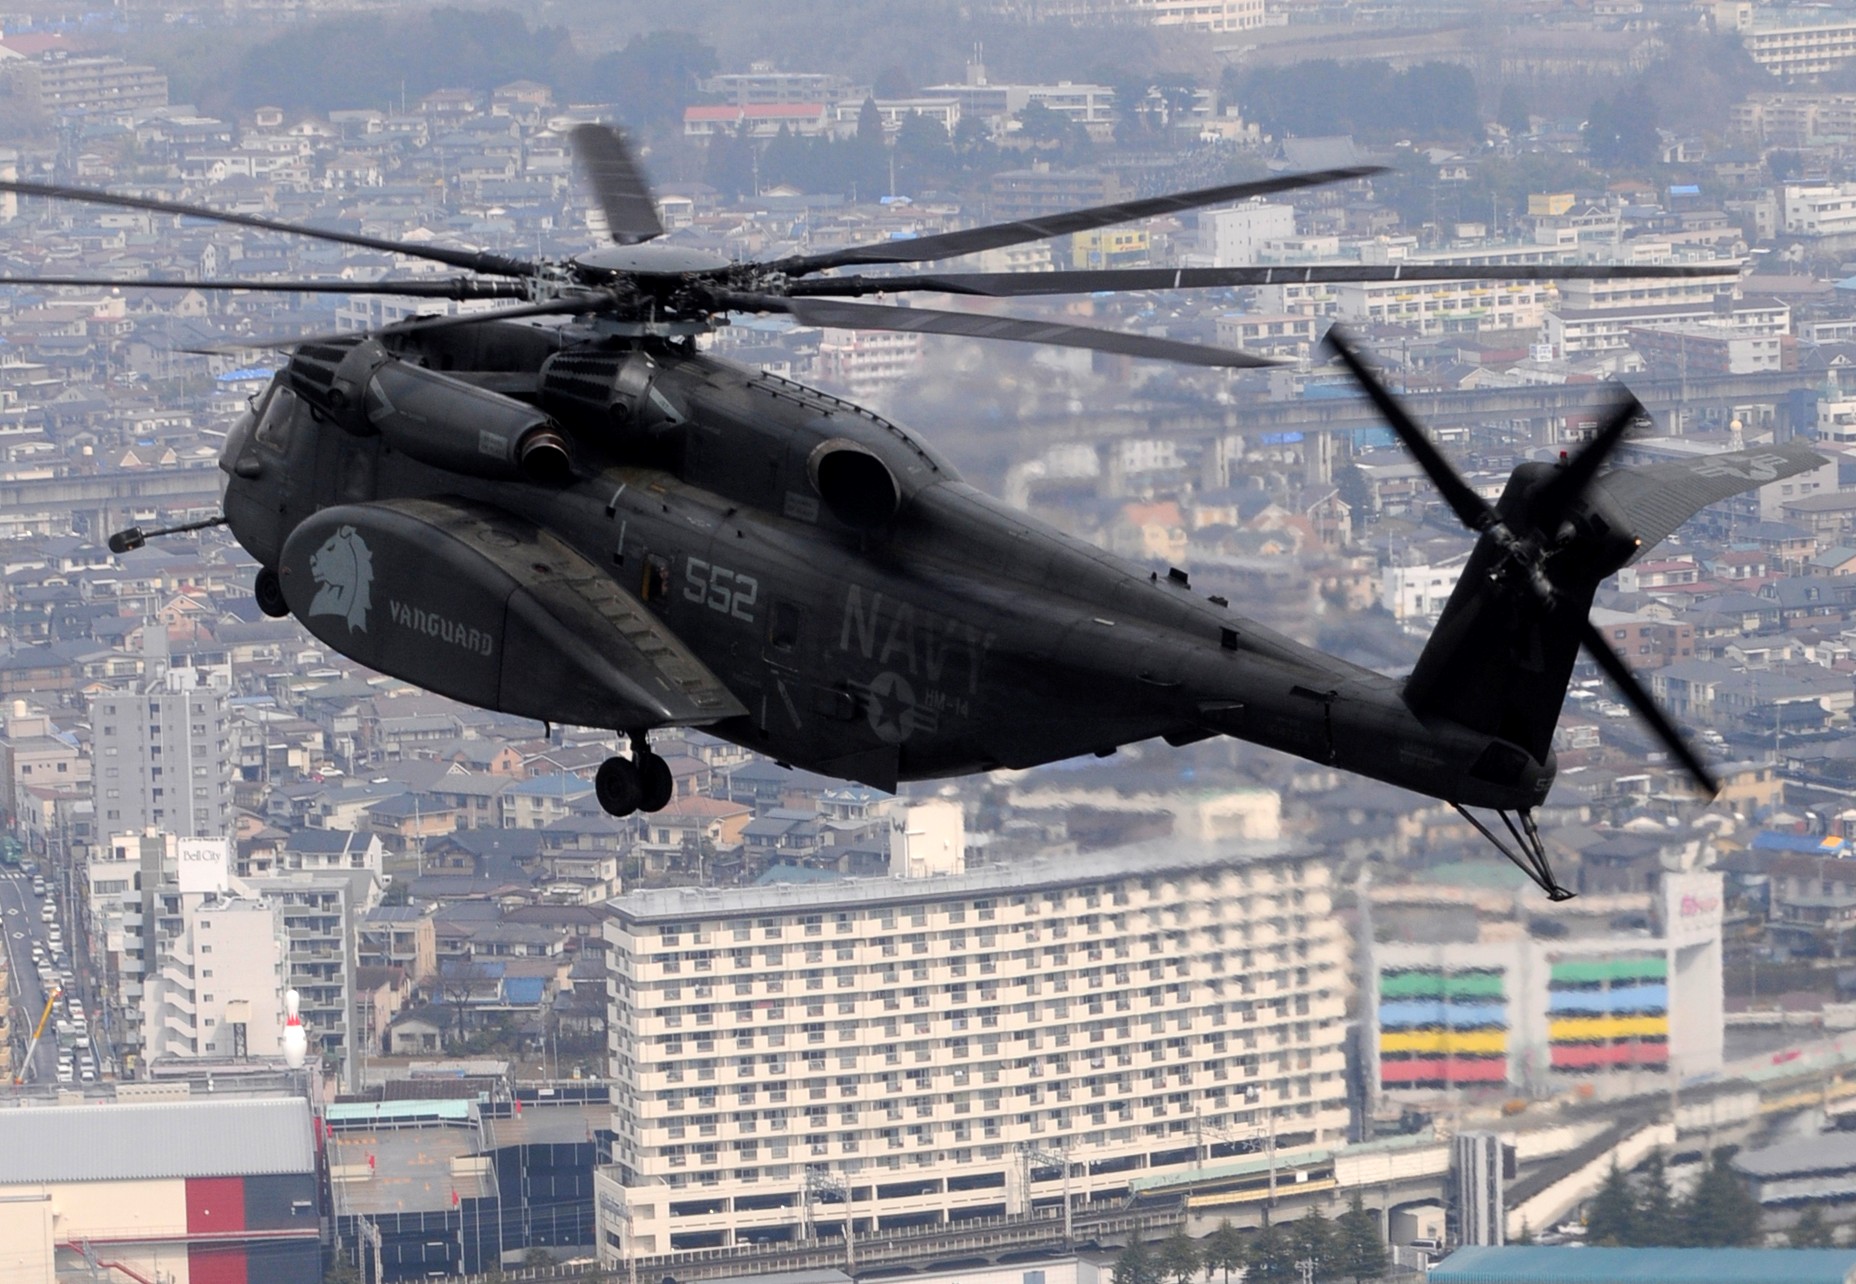 hm-14 vanguard helicopter mine countermeasures squadron navy mh-53e sea dragon 29 sendai japan